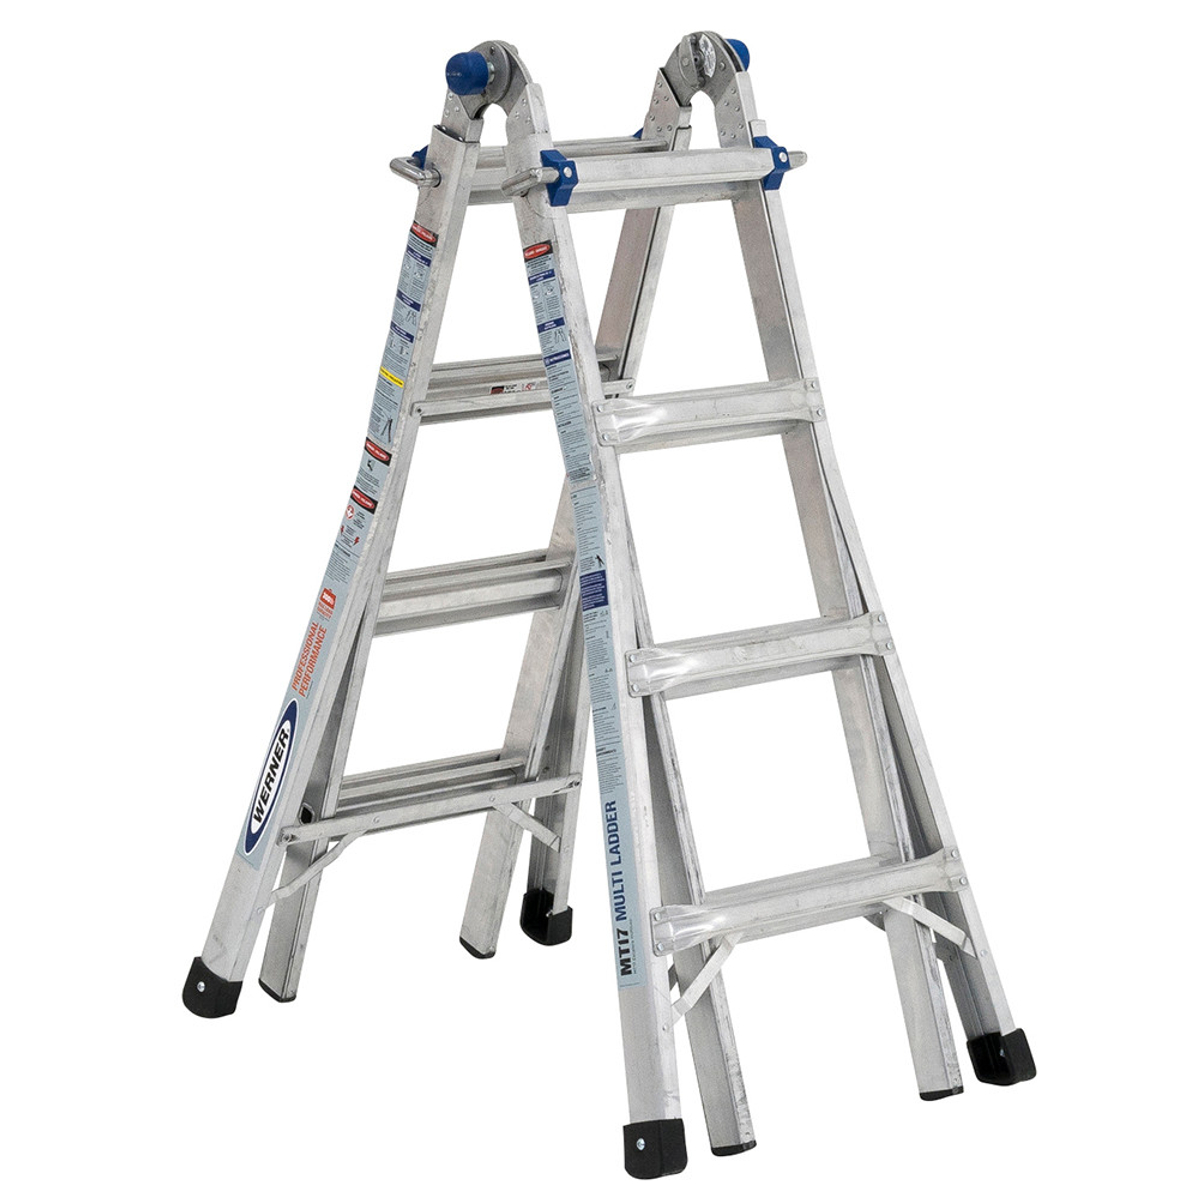 Adjustable Height Ladders | Platforms & Ladders | Platforms and Ladders